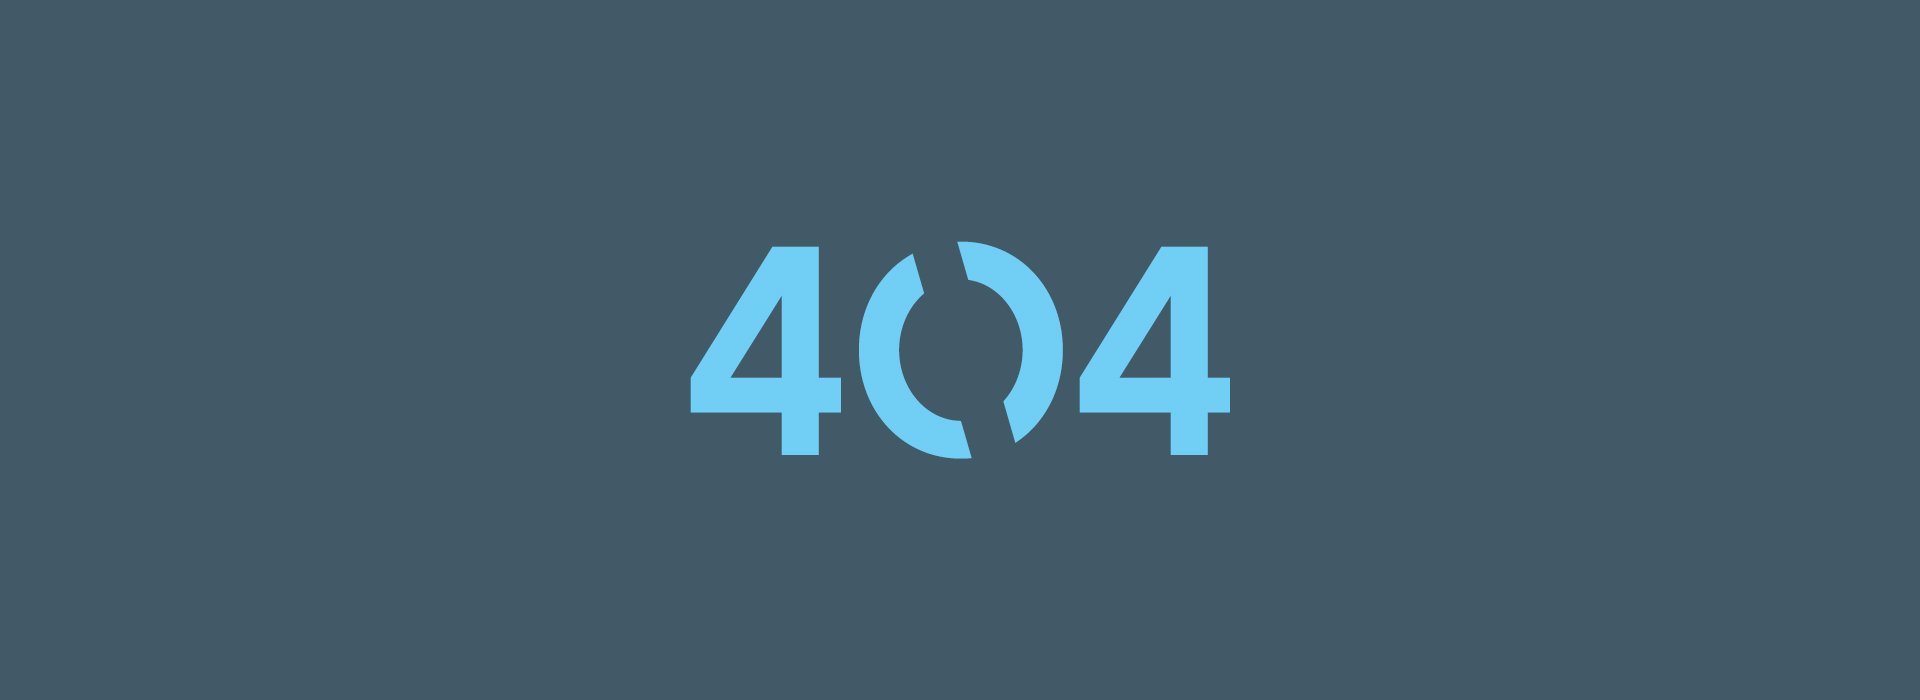 404-banner